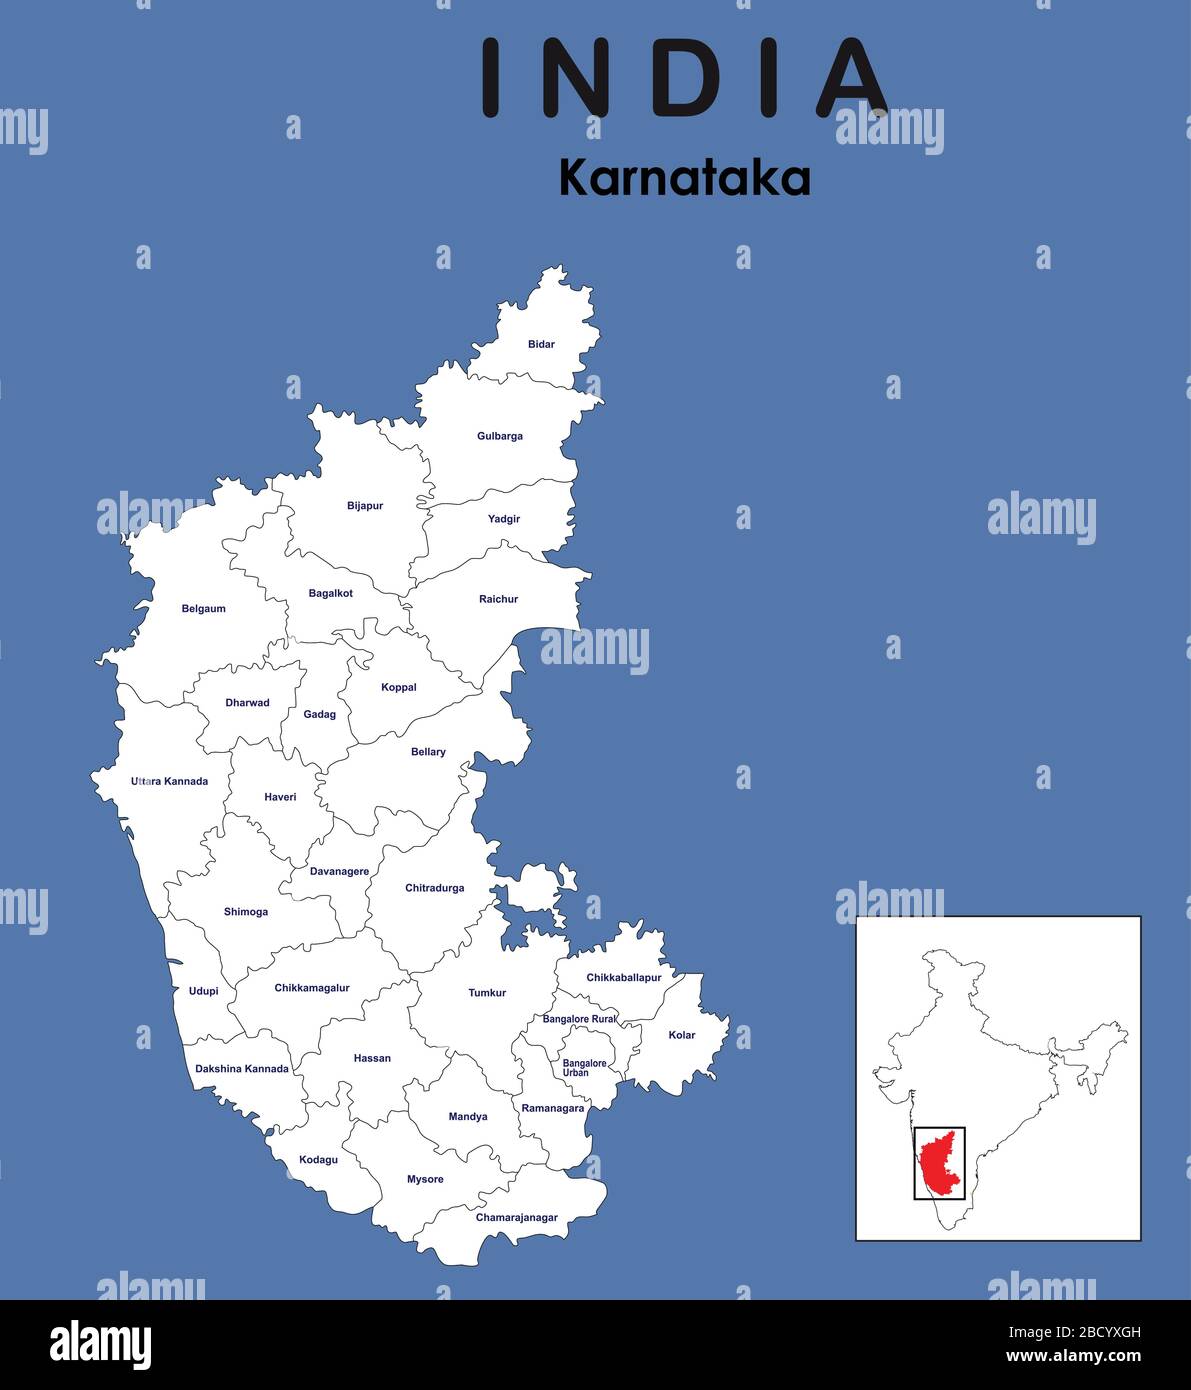 Karnataka full map. vector illustration of colourful district map of karnataka state Stock Vector